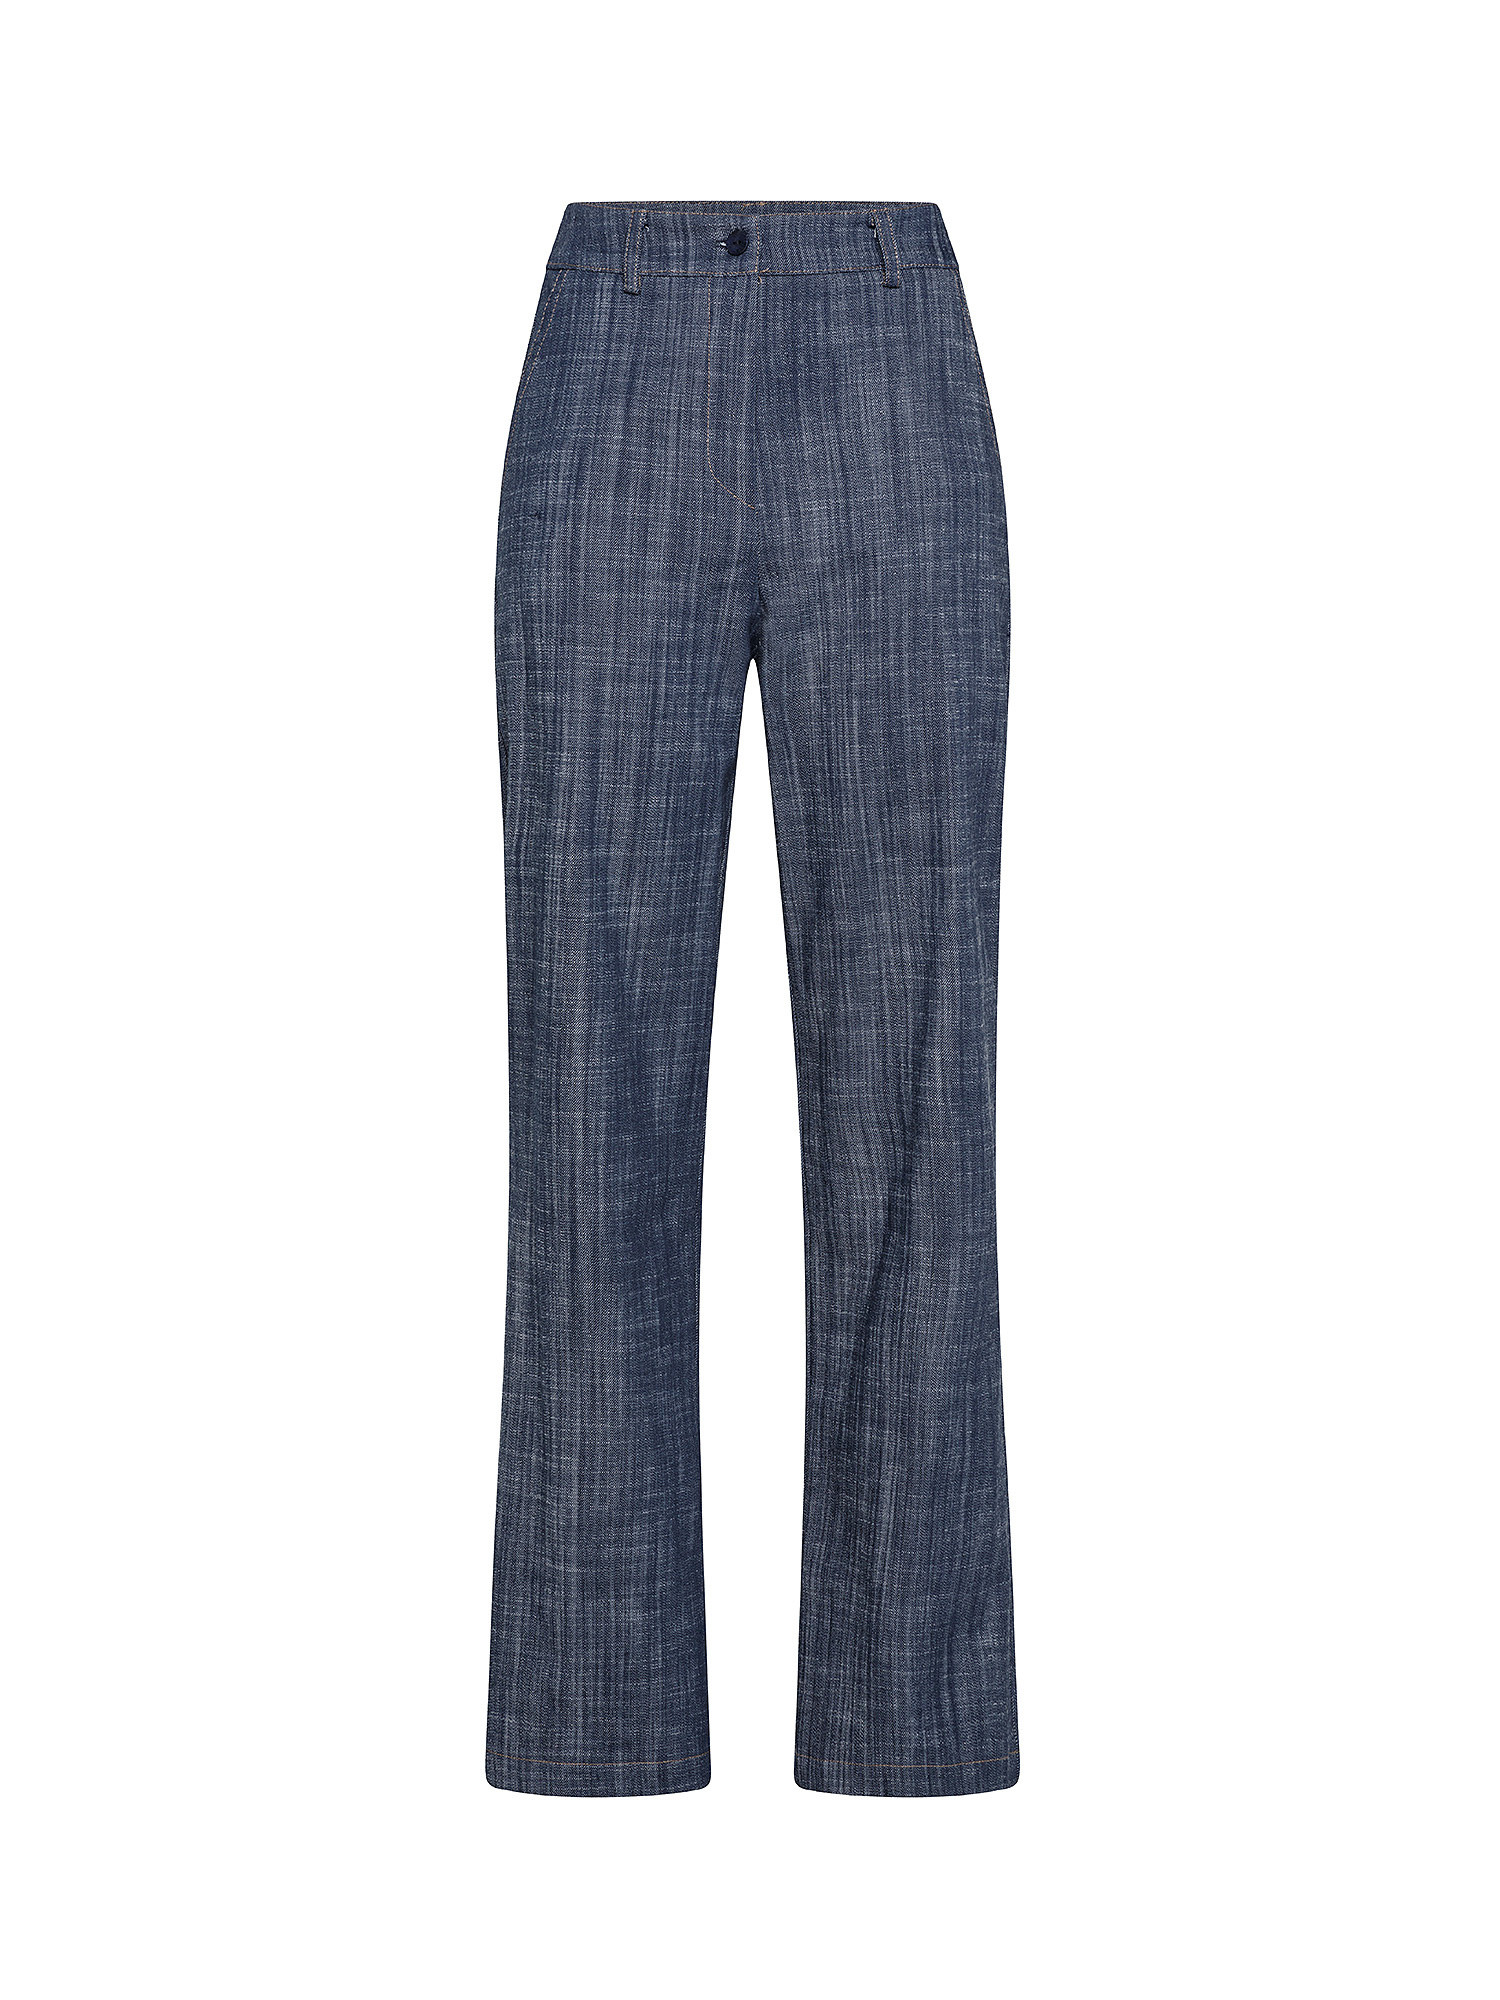 Pantalone jeans, Blu, large image number 0